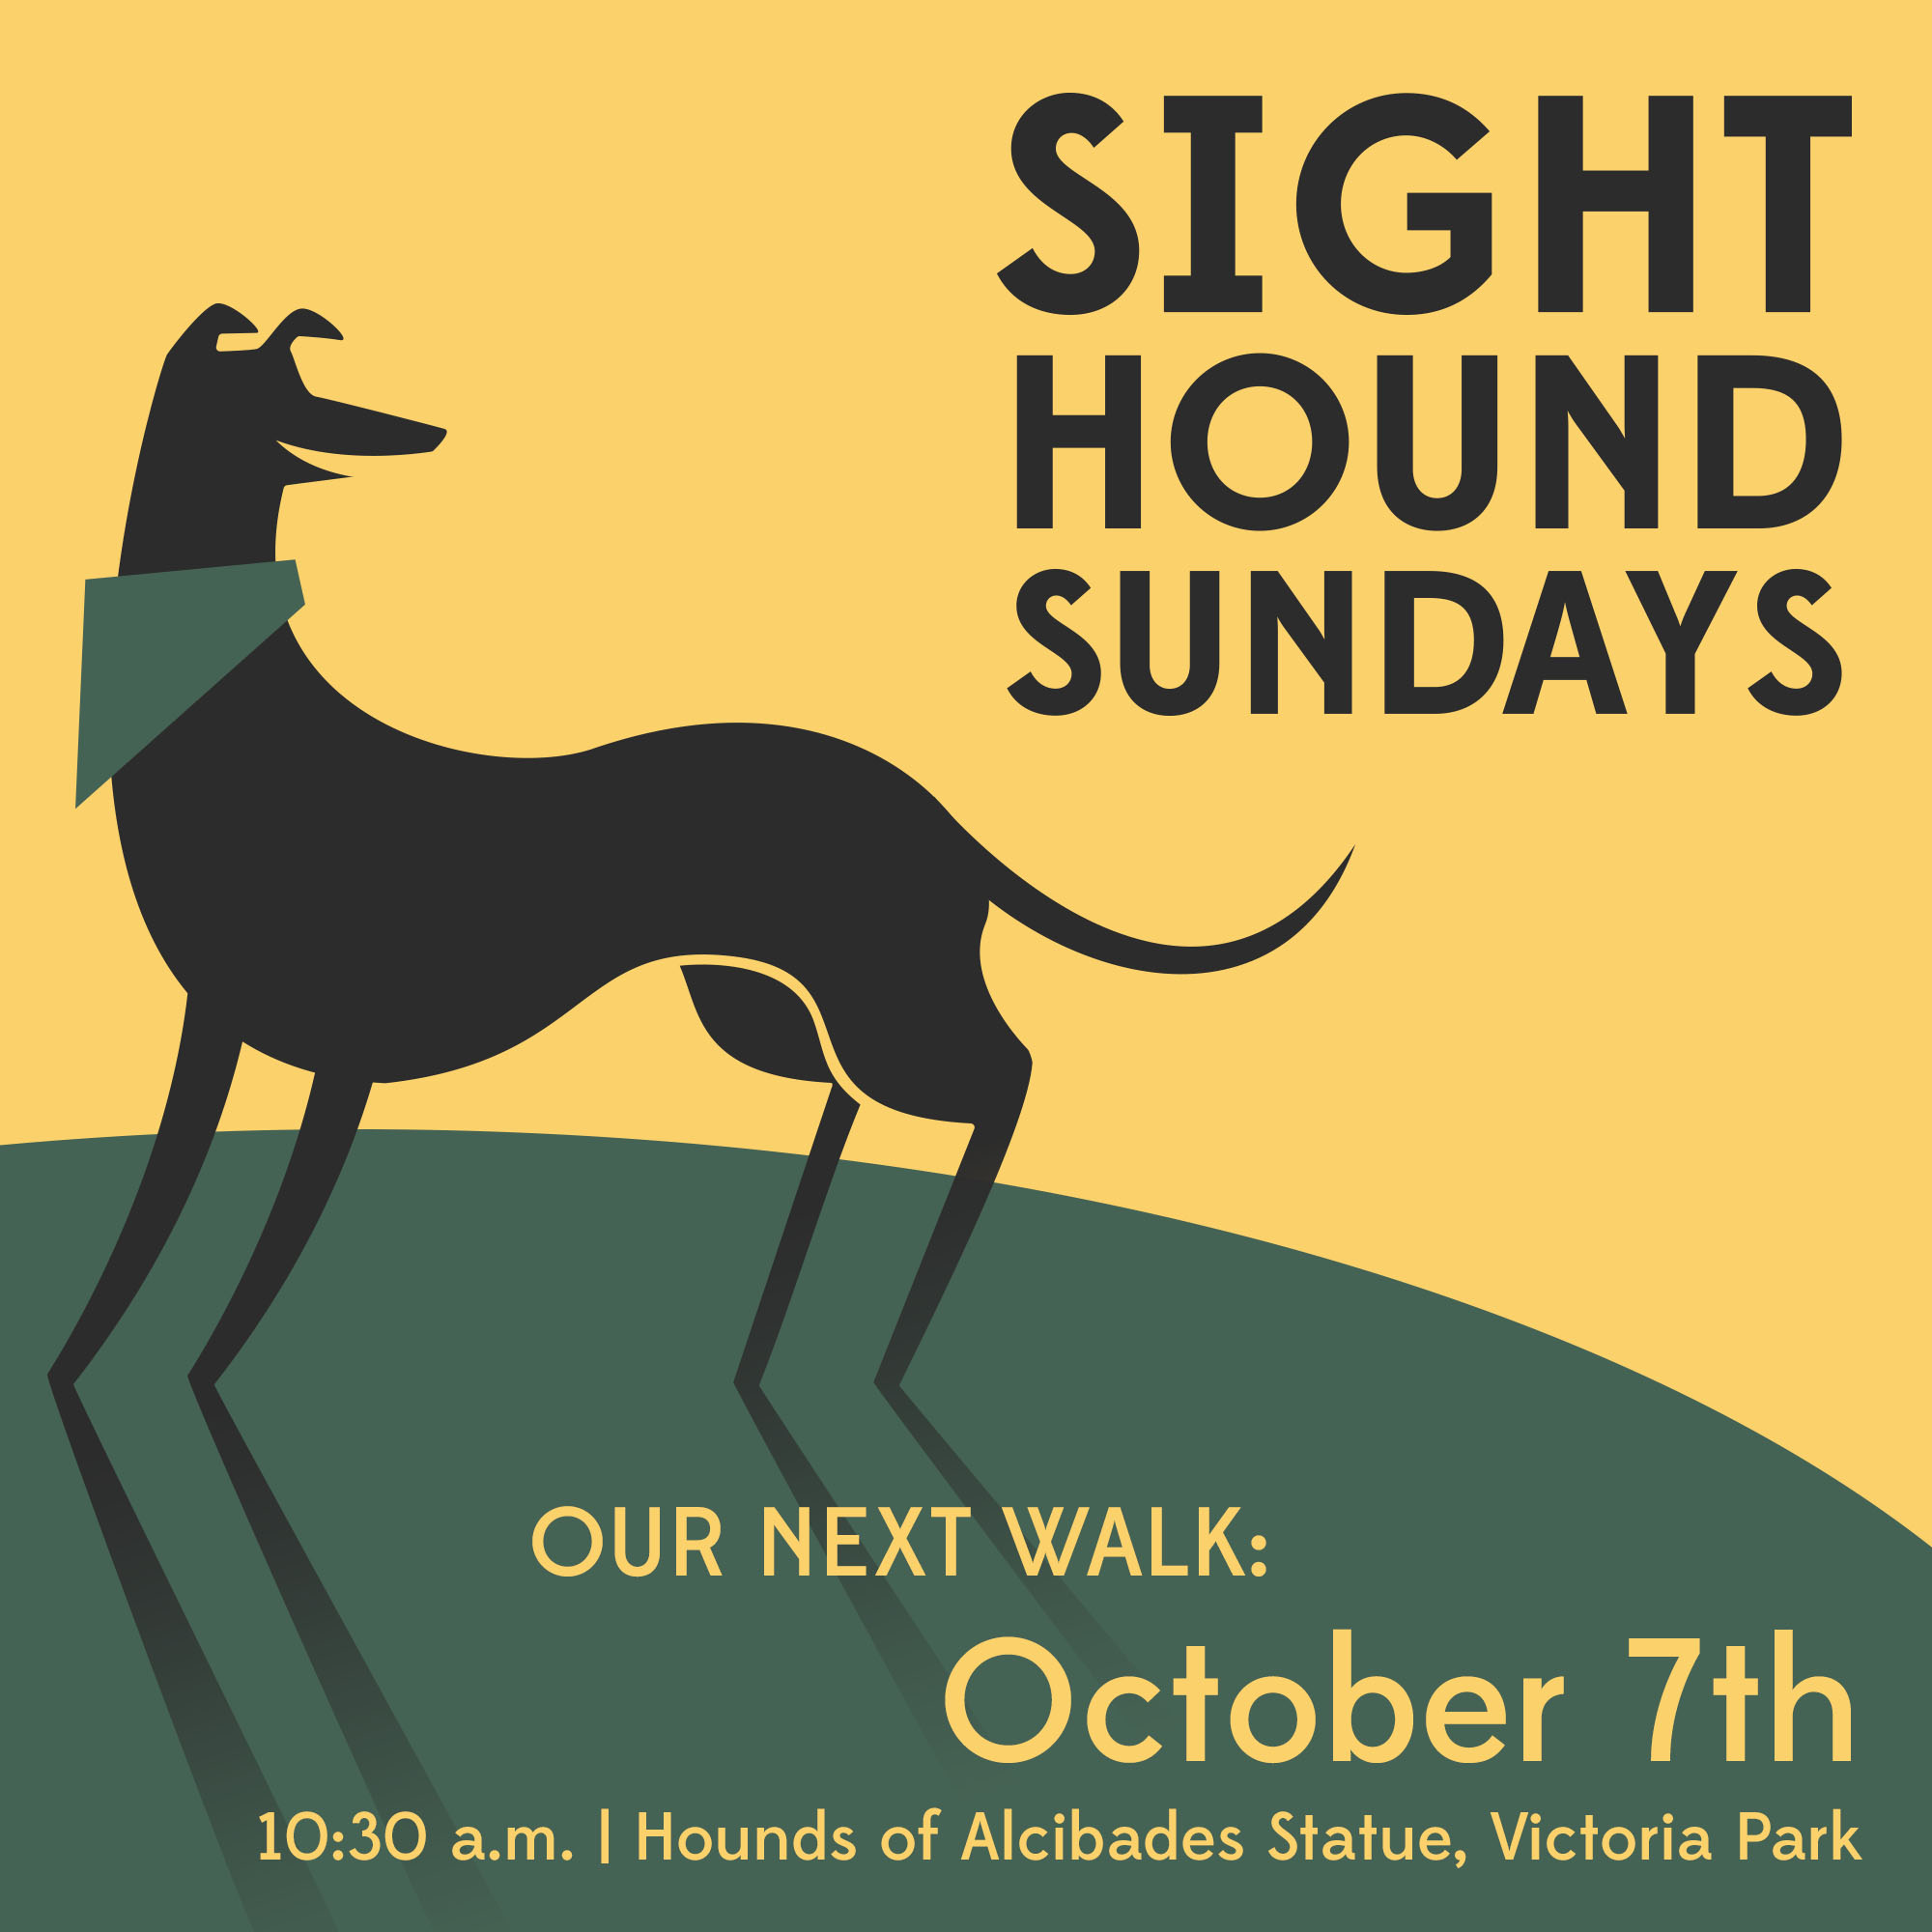 SighthoundSundays_Instagram_Monthly_October.jpg